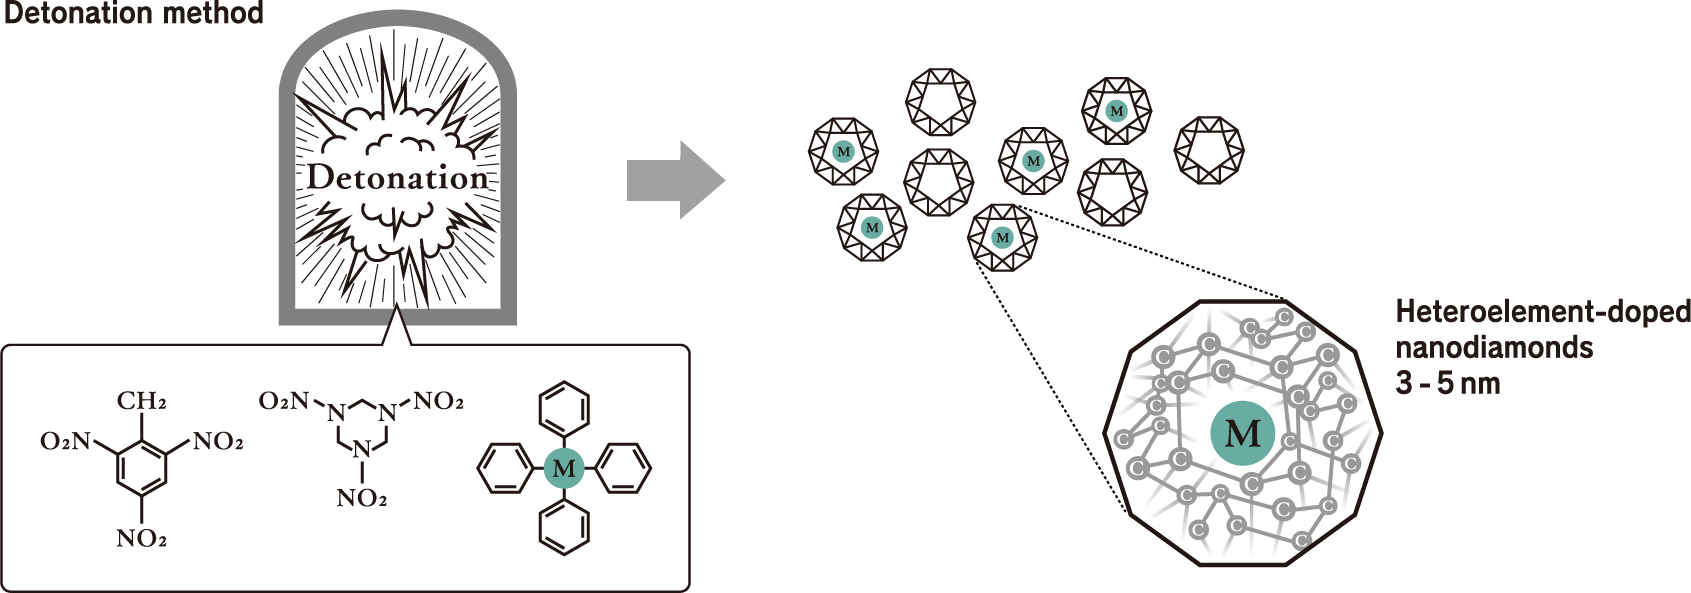 Daicel’s nanodiamond technology mechanism